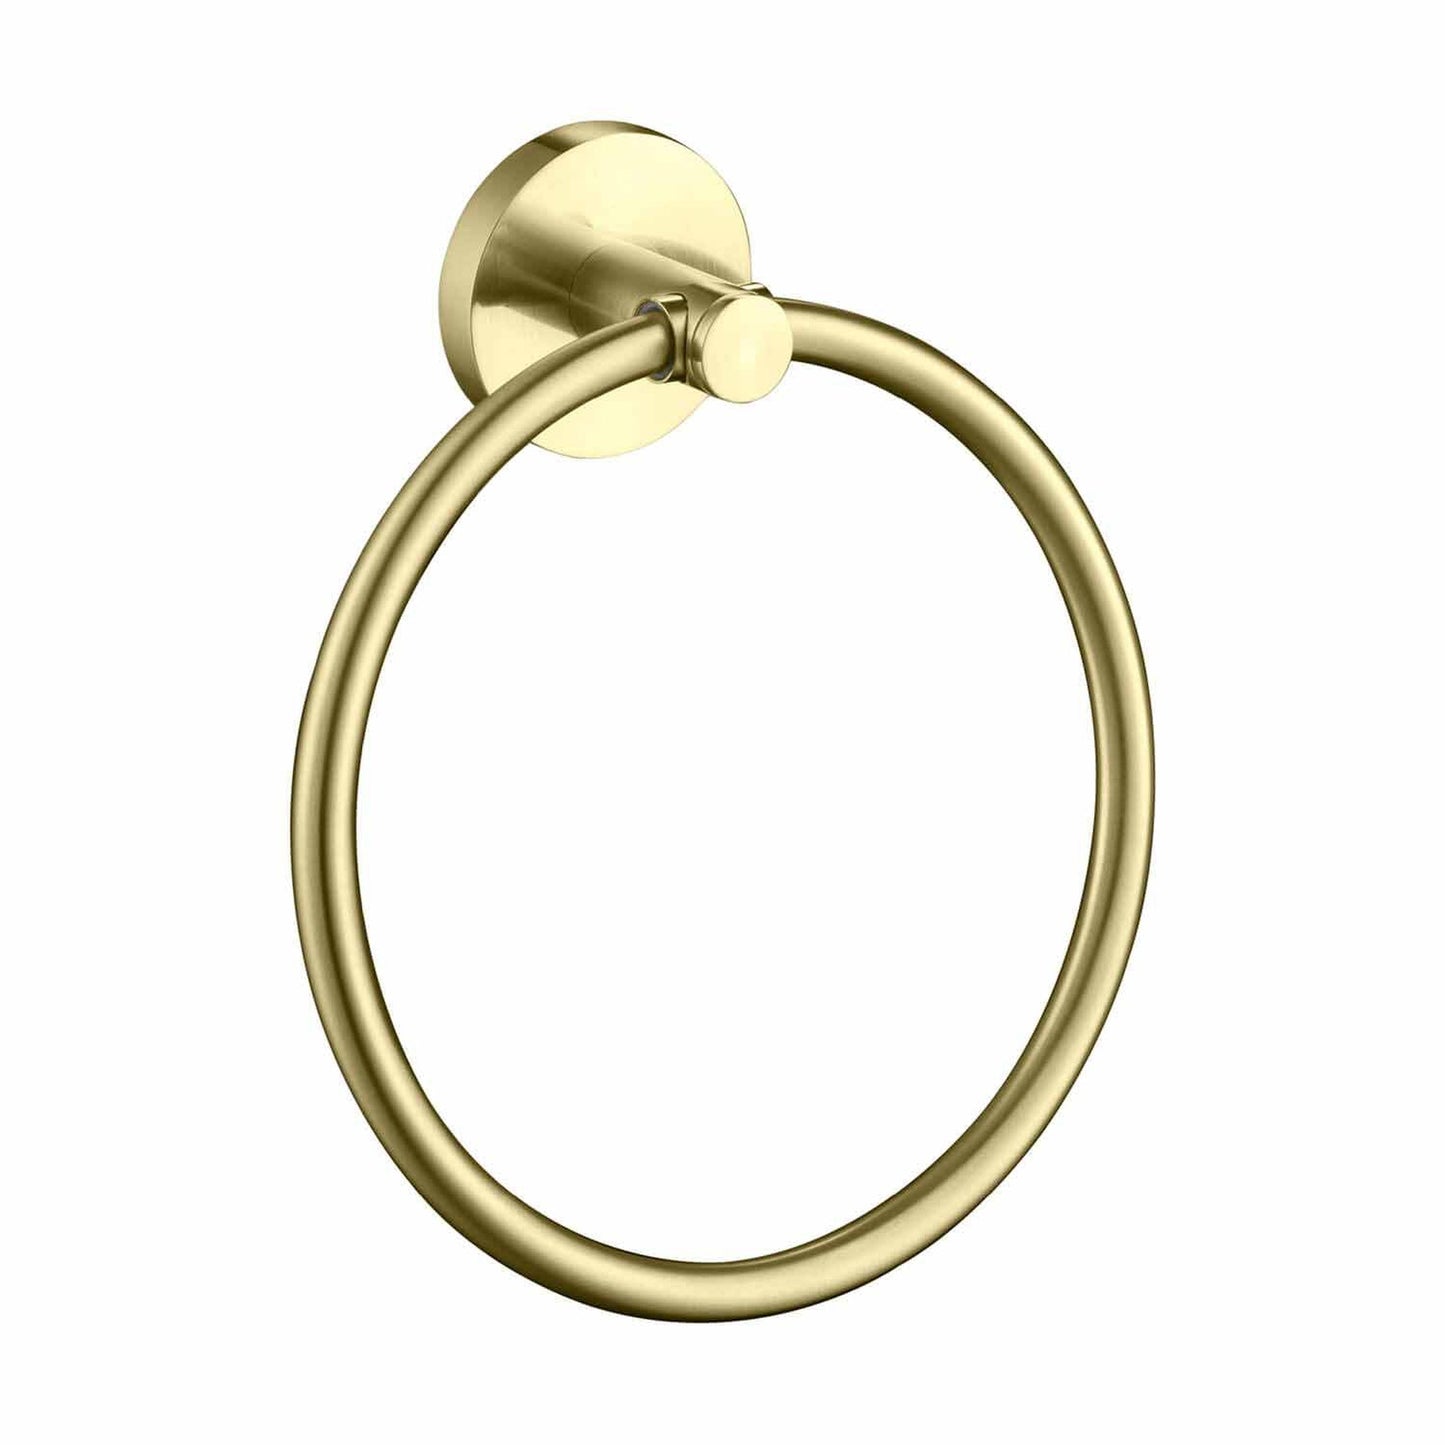 KIBI Circular Brass Bathroom Towel Ring in Brushed Gold Finish